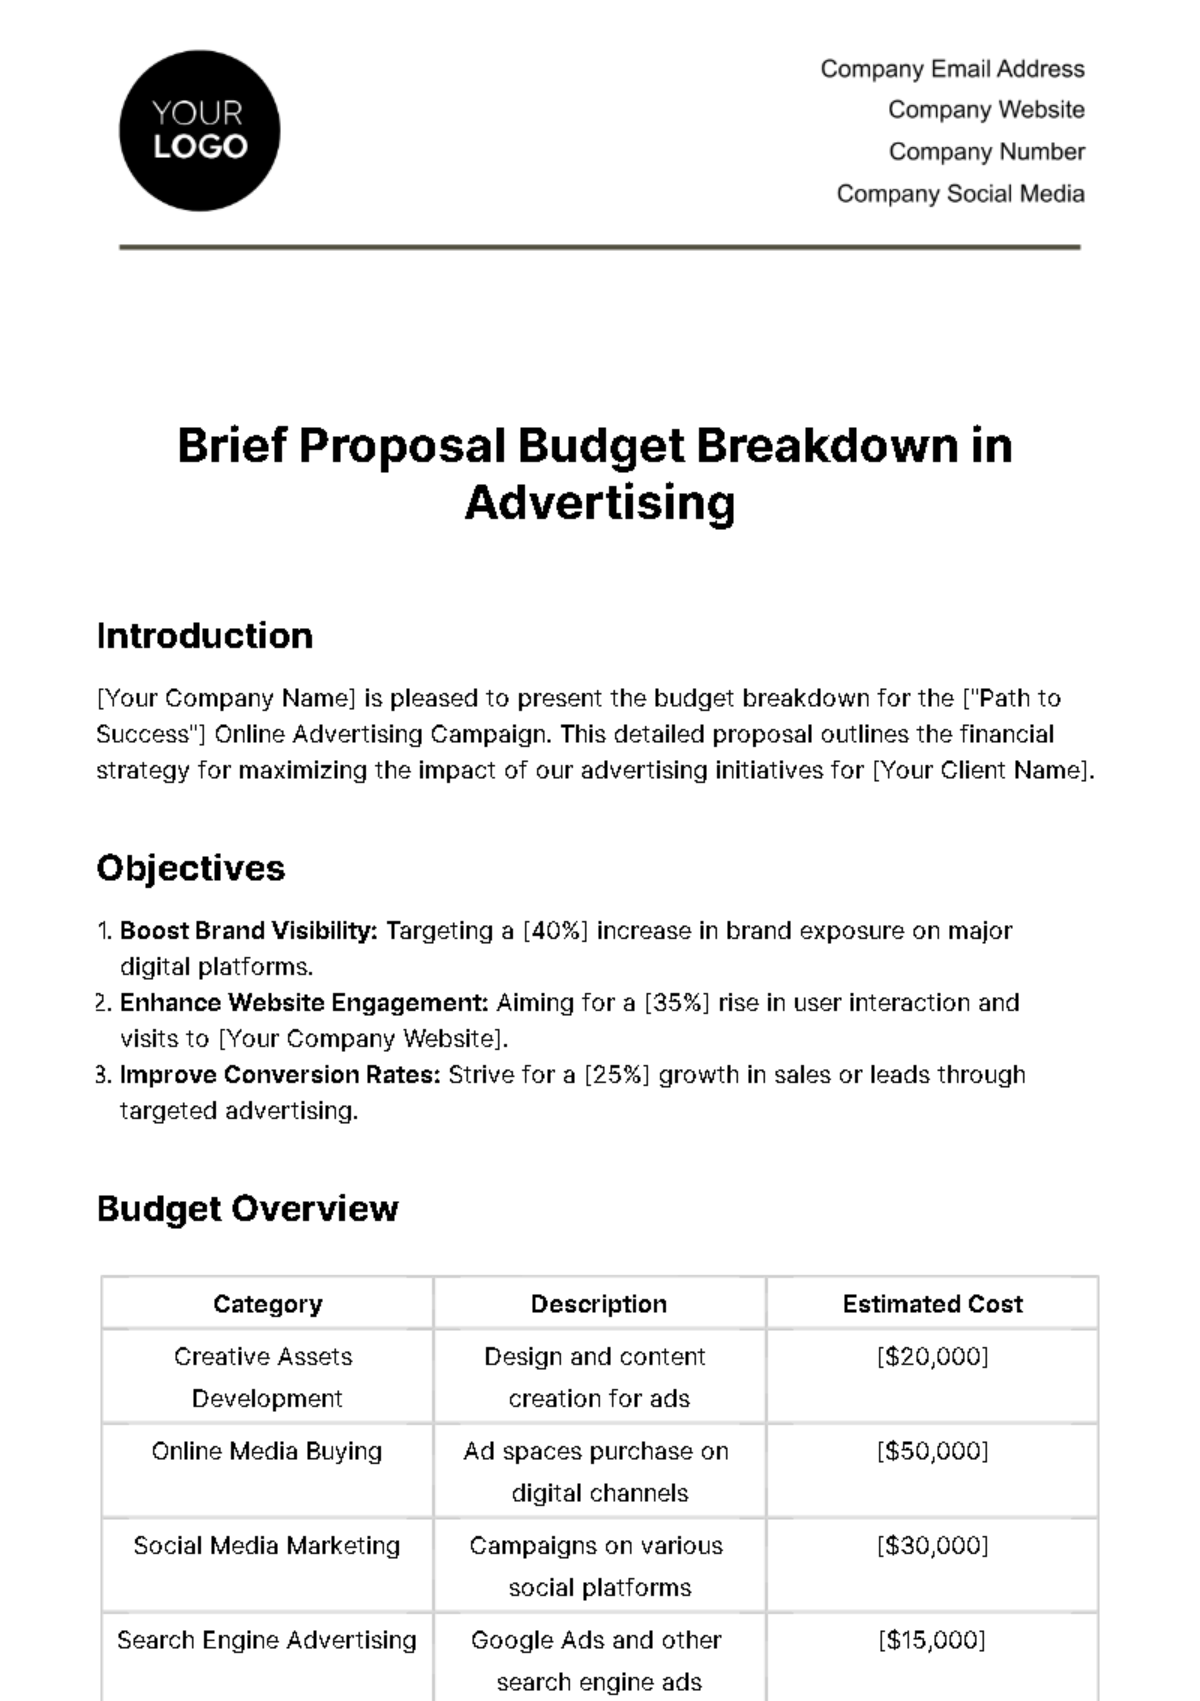 Brief Proposal Budget Breakdown in Advertising Template